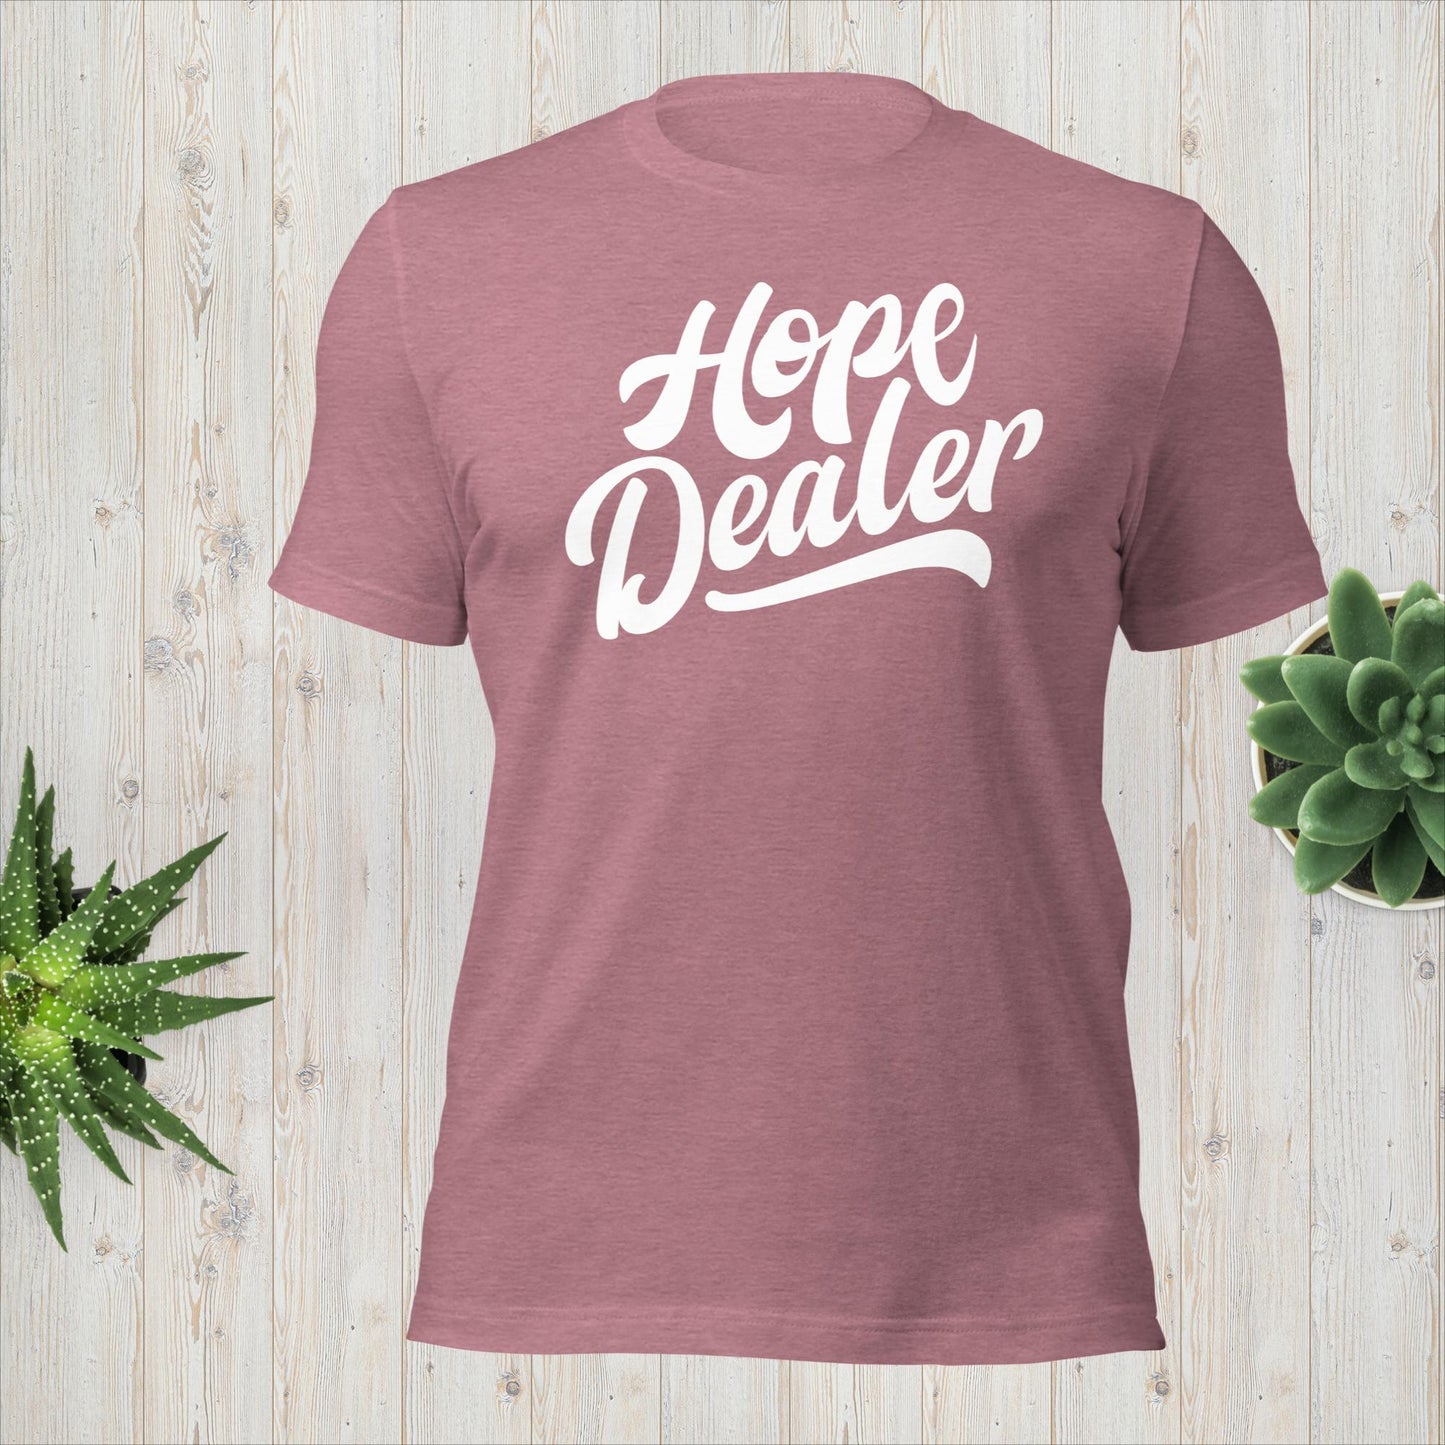 Hope Dealer Unisex t-shirt [Unleash Your Inner Optimism]